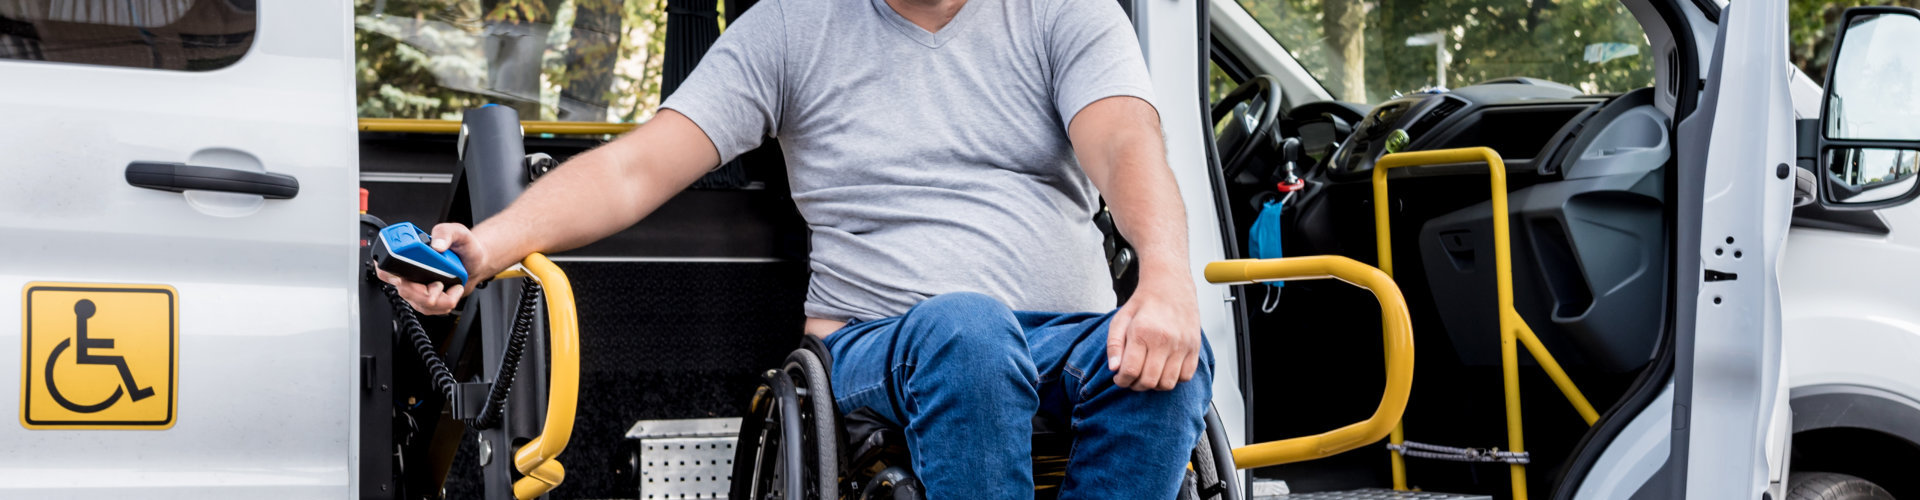 a man in a wheel chair getting inside of car